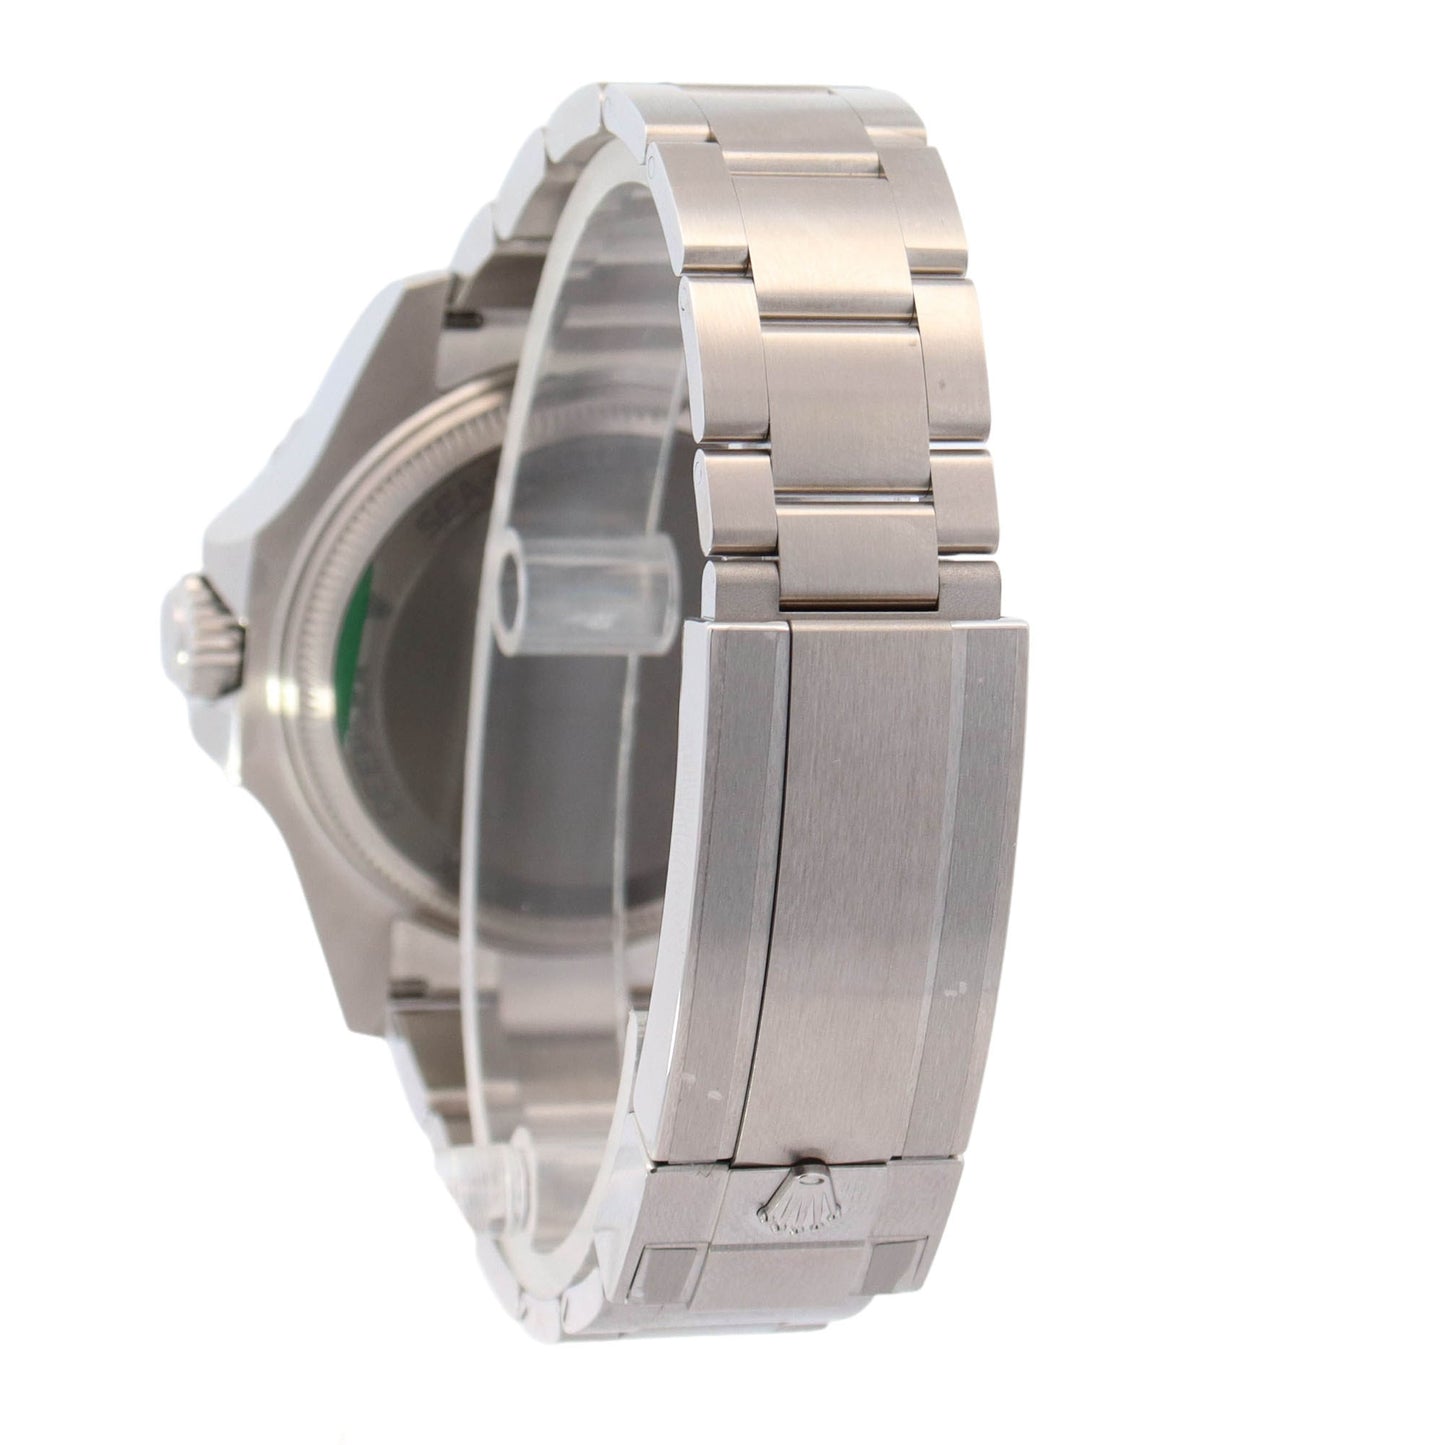 Rolex Sea-Dweller Deepsea "James Cameron" Stainless Steel 44mm Blue/Black Dot Dial Watch Reference# 136660 - Happy Jewelers Fine Jewelry Lifetime Warranty